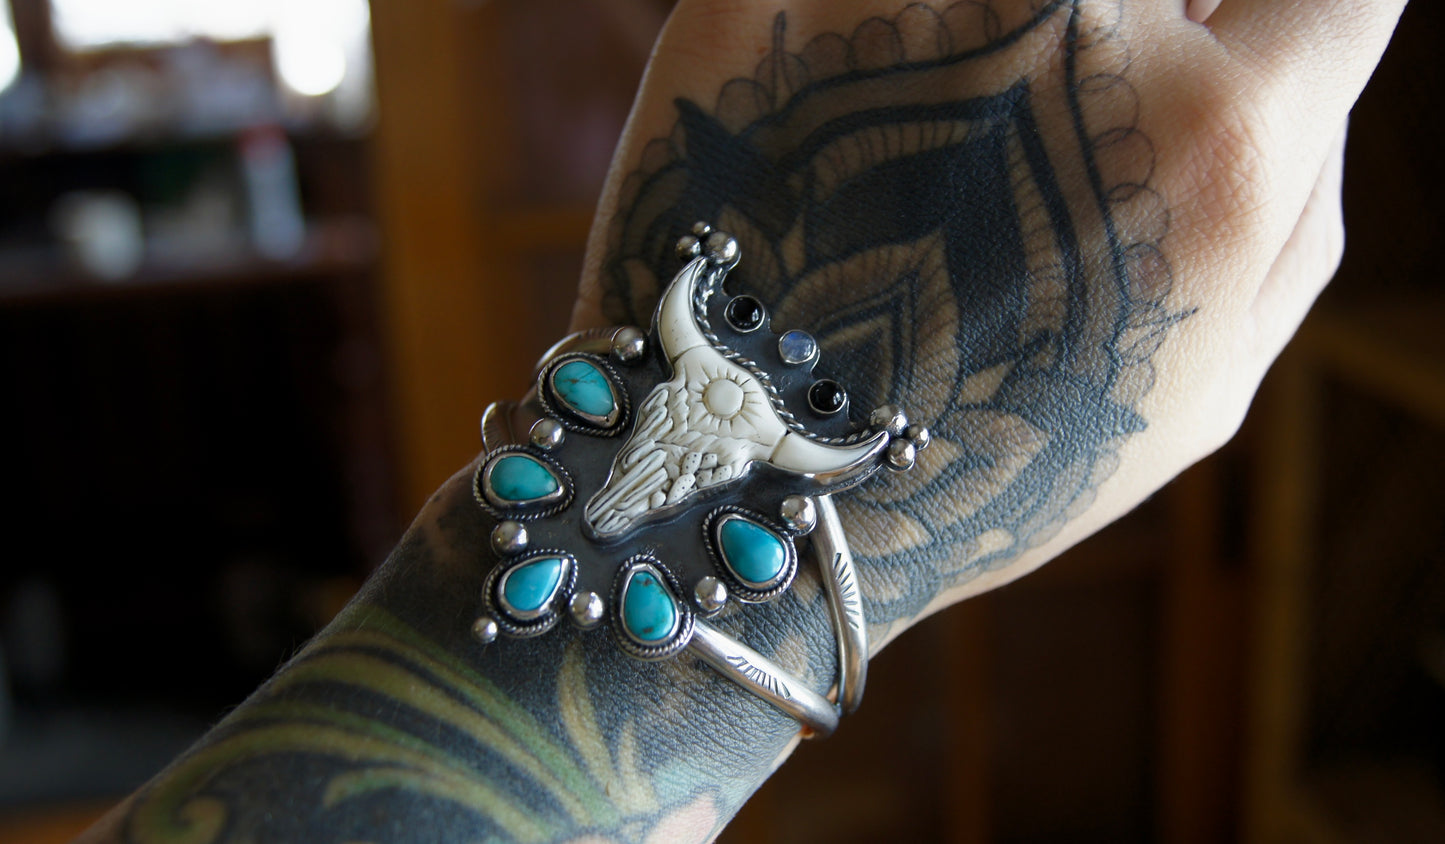 Desert Dreamin' Cuff Bracelet - Size S/M